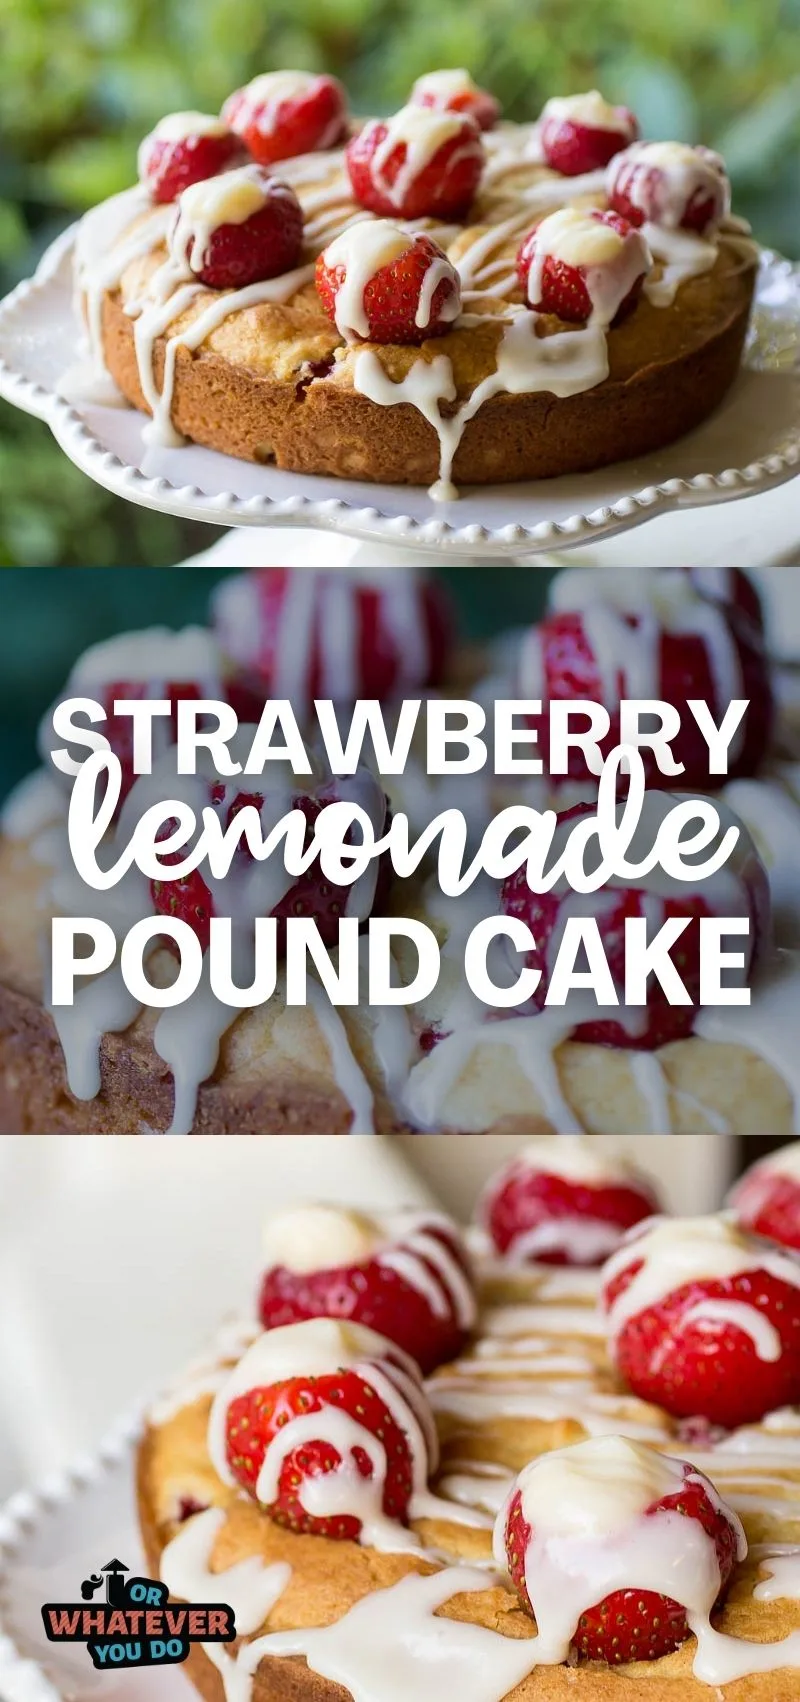 https://www.orwhateveryoudo.com/wp-content/uploads/2015/11/Strawberry-Lemonade-Pound-Cake.jpg.webp